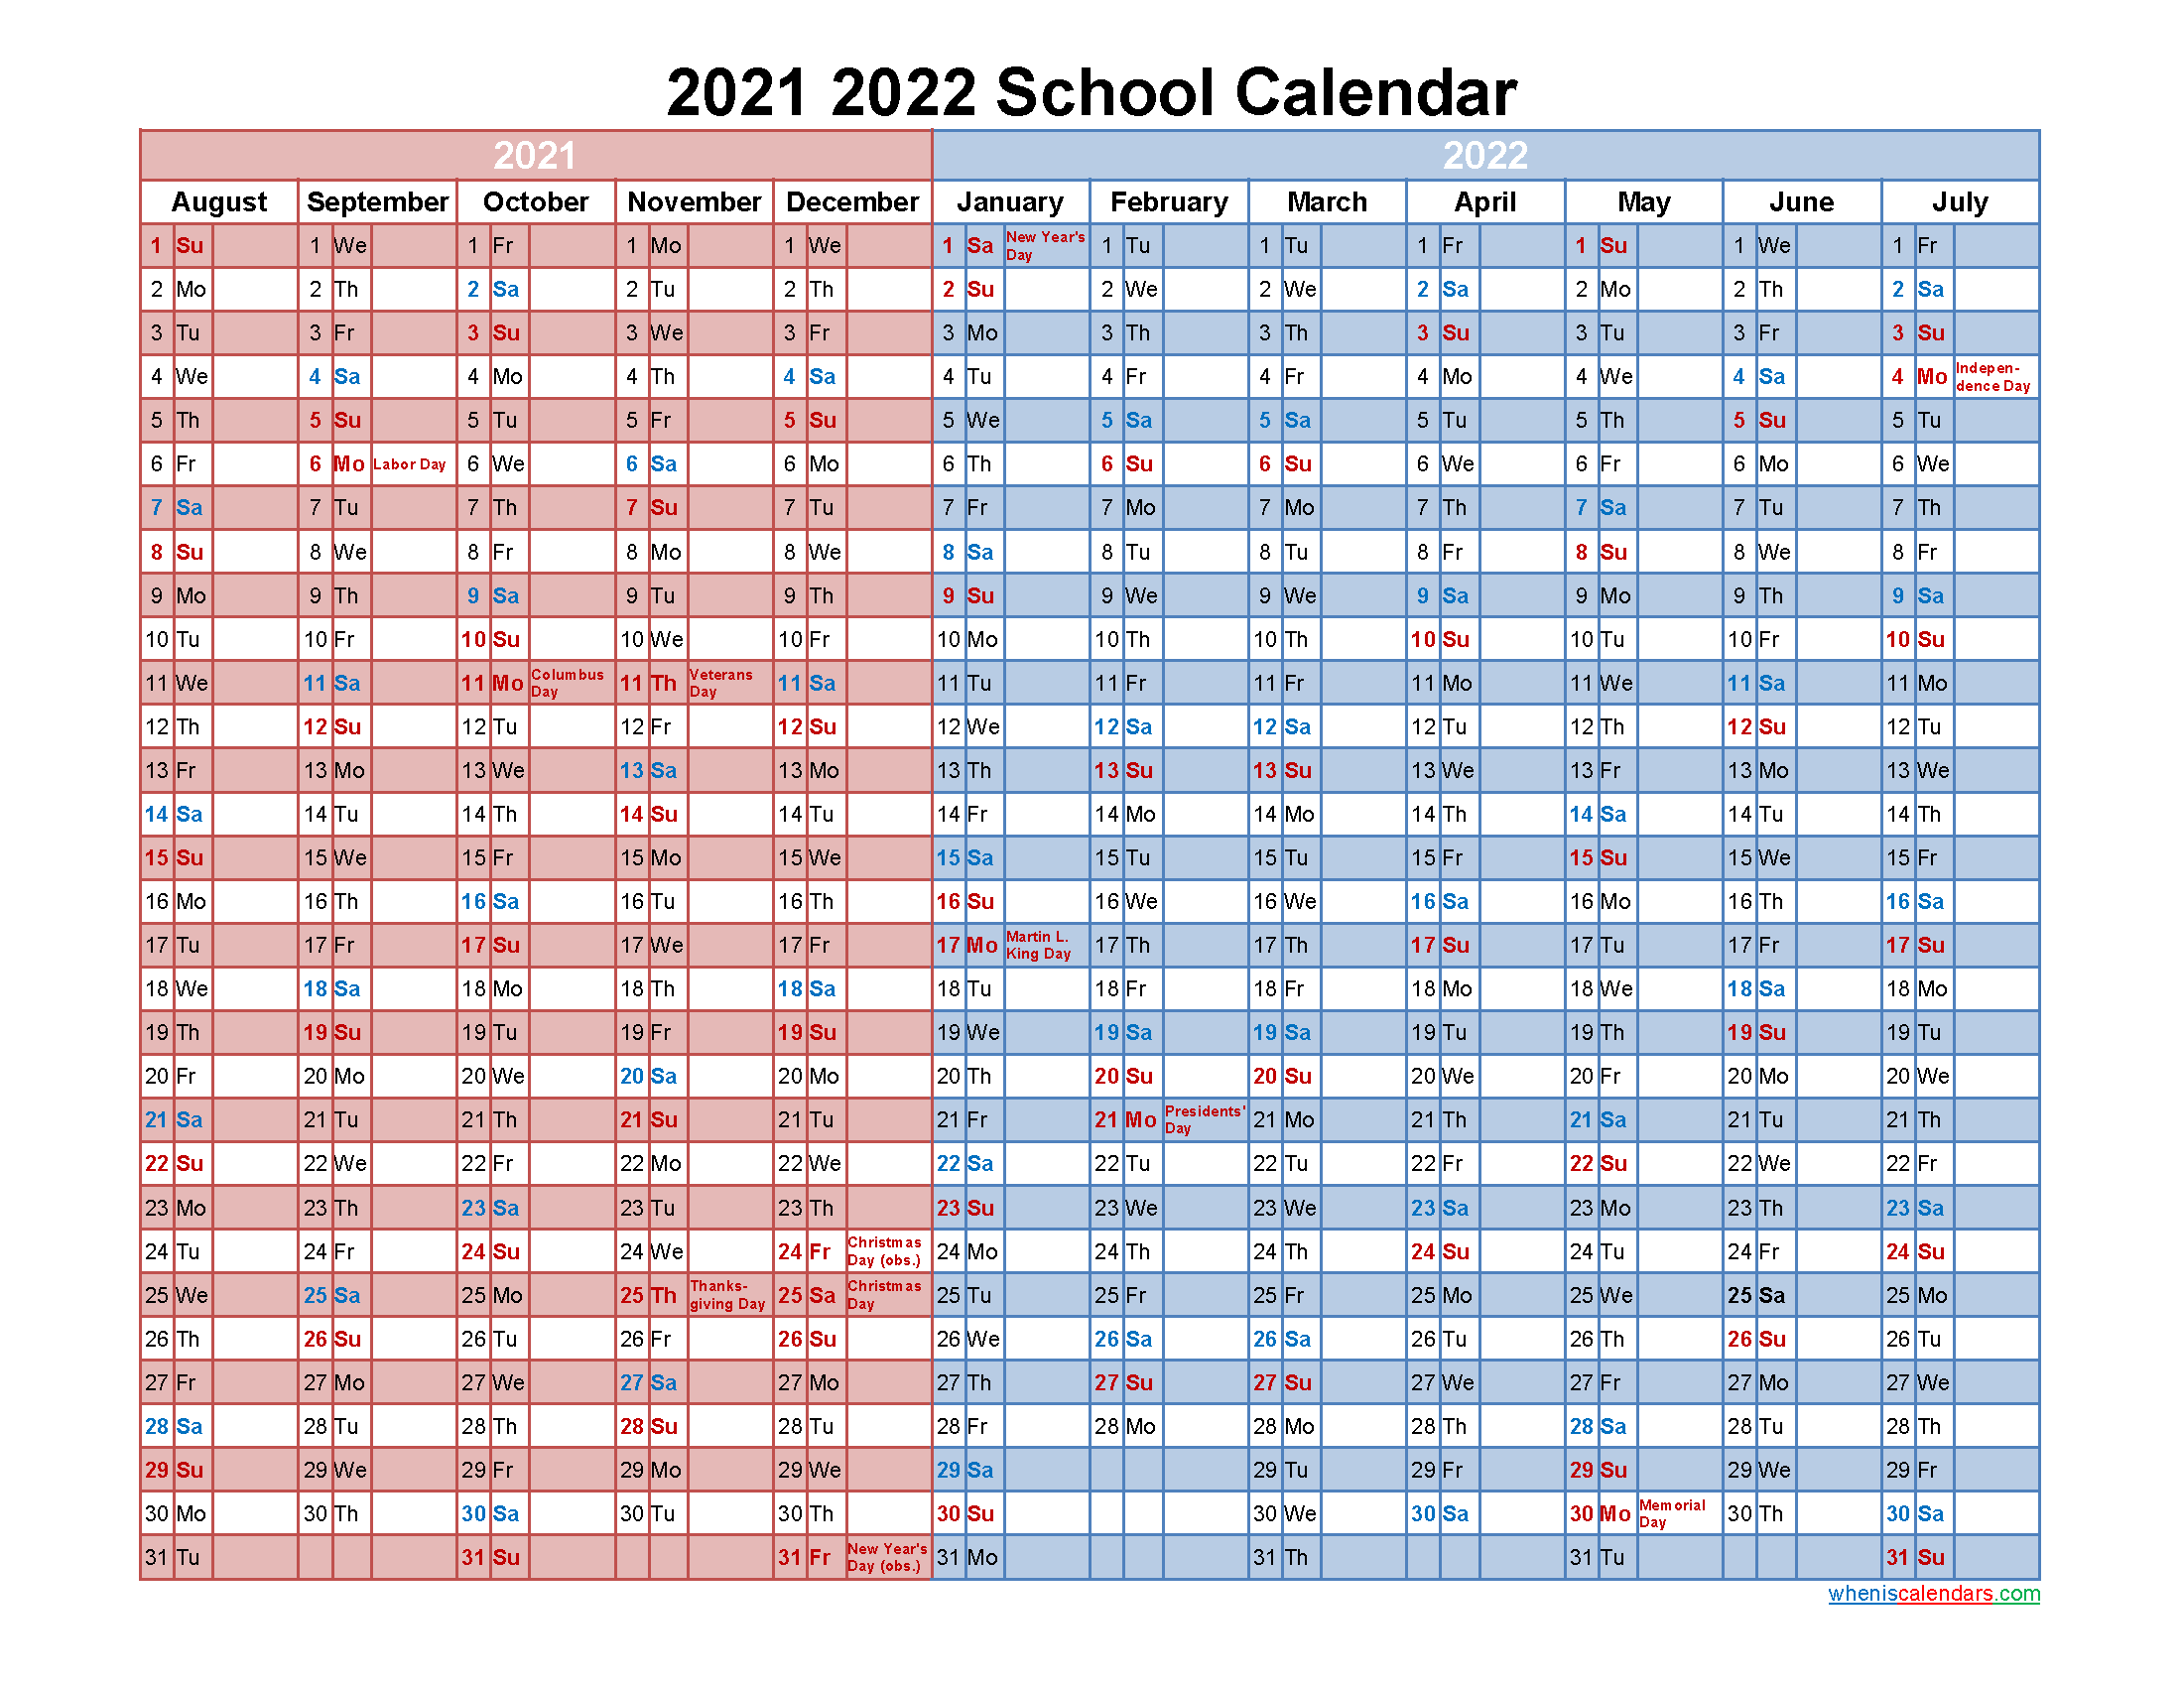 2021 and 2022 School Calendar Printable - Template No.22scl59